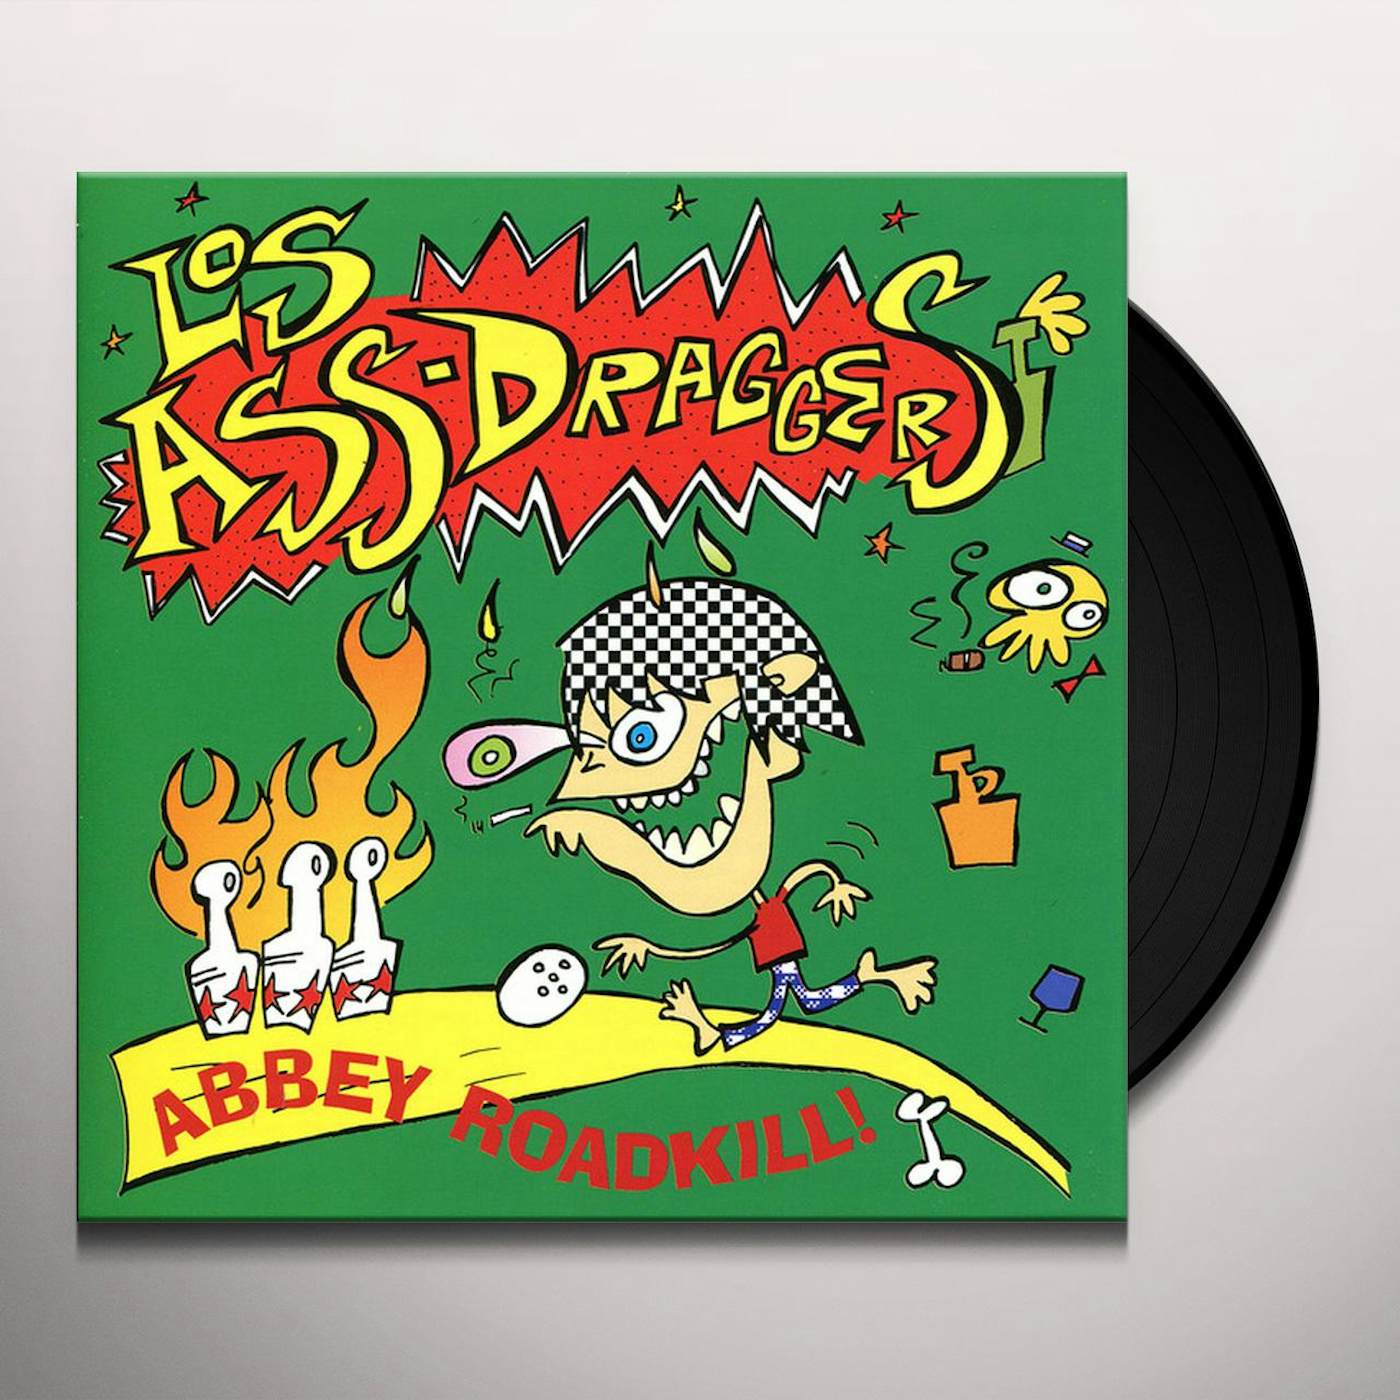 Ass-Draggers Abbey Roadkill Vinyl Record